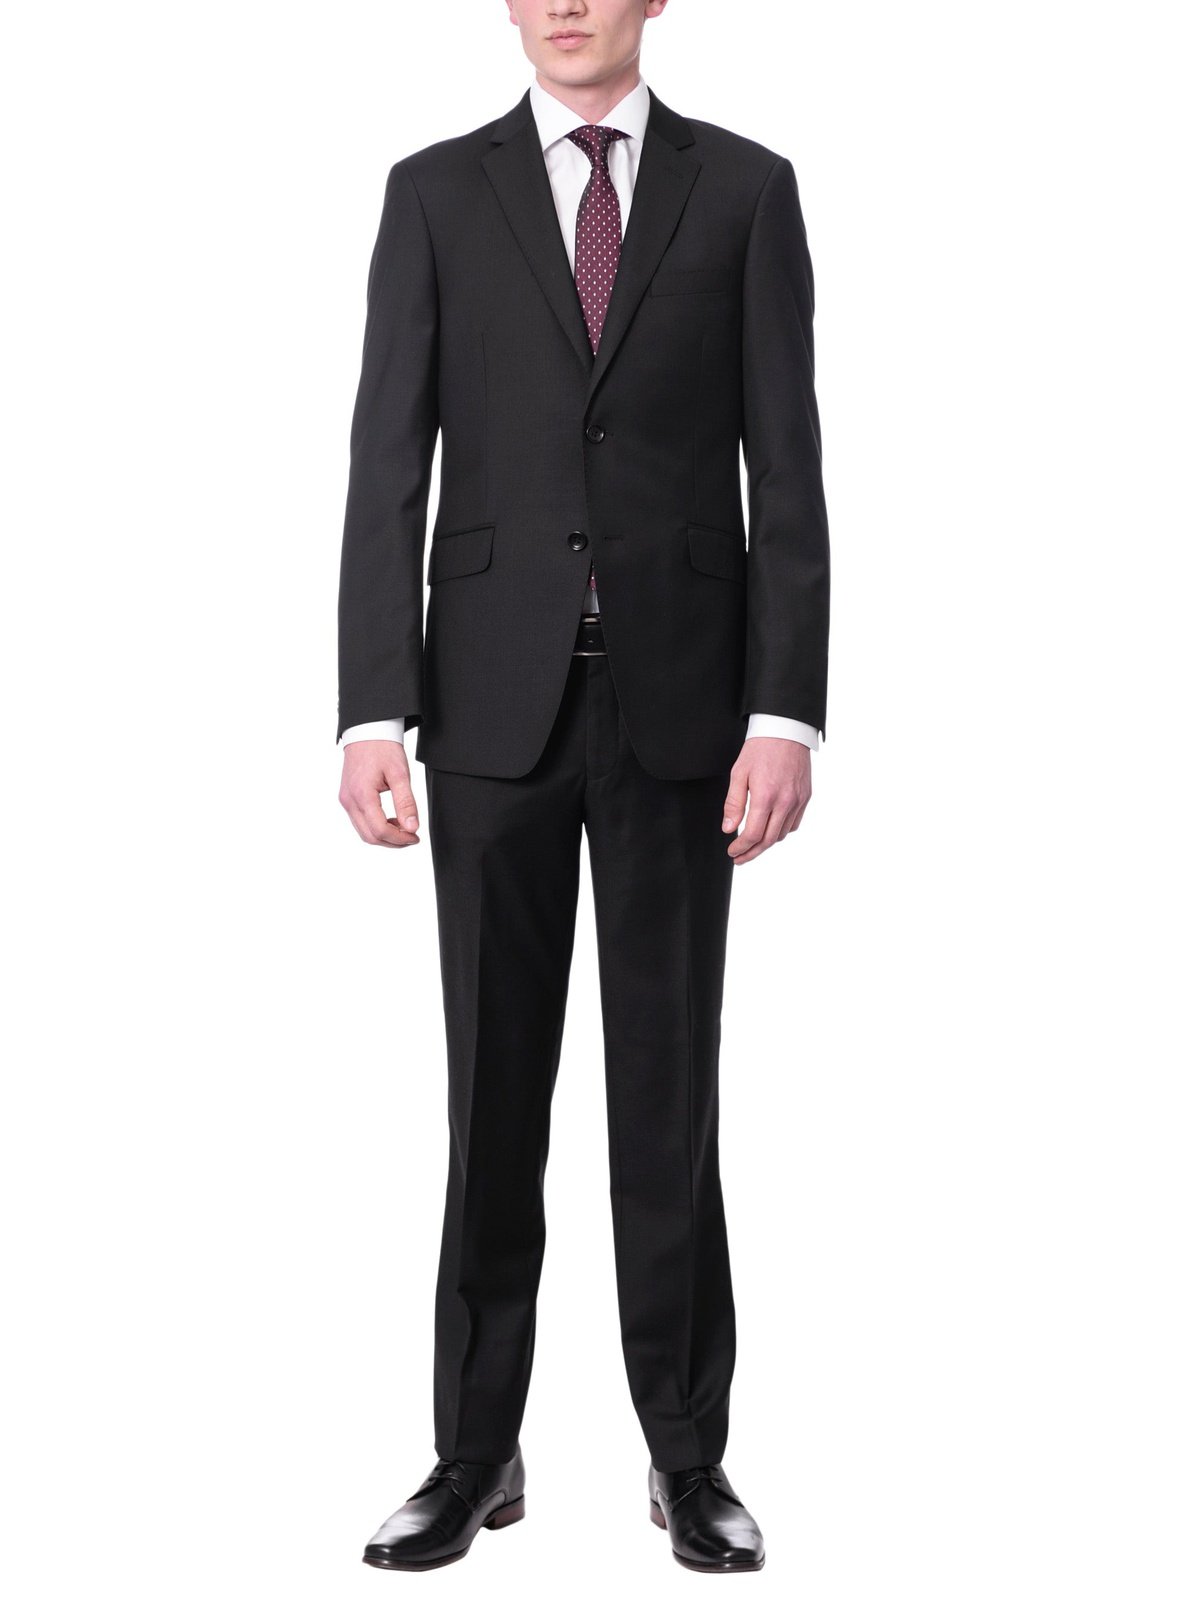 https://cdn.shopify.com/s/files/1/0506/3196/6902/files/label-m-suits-men-s-euro-slim-fit-solid-black-two-button-2-piece-100-wool-suit-33712908533942_1600x.jpg?v=1691515371